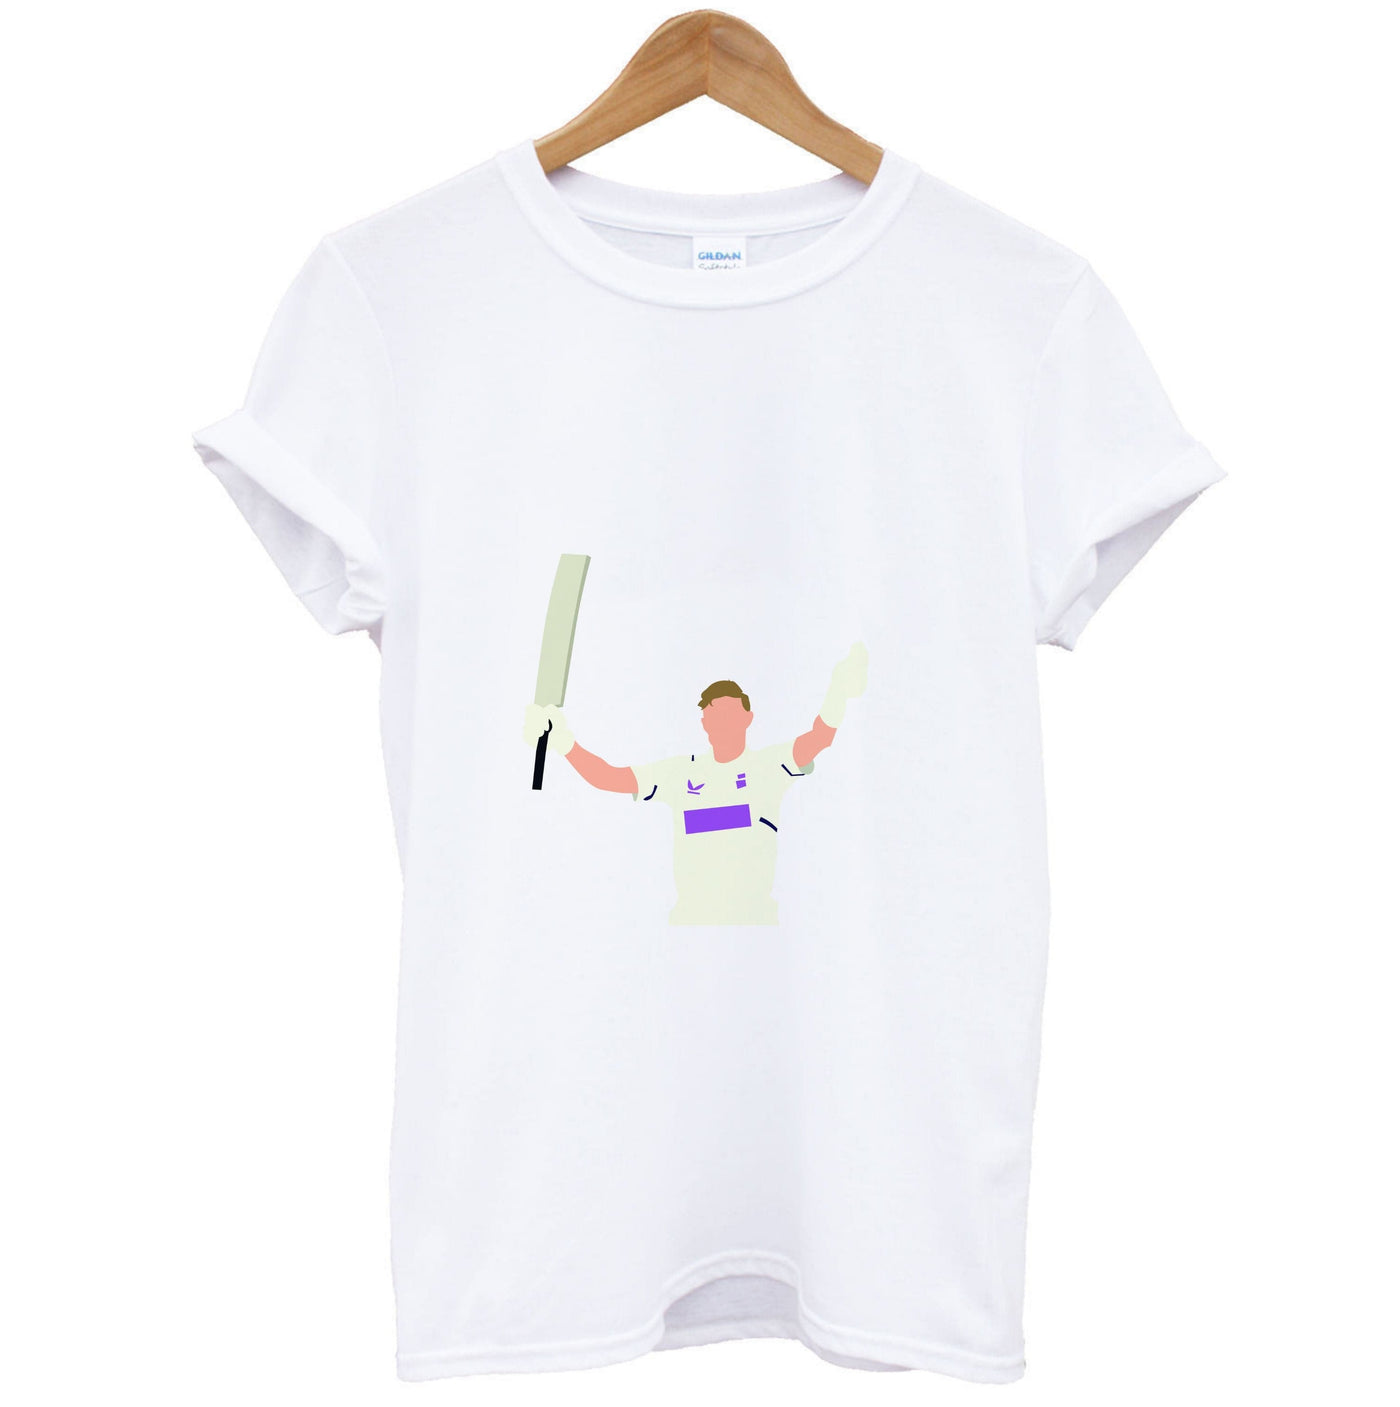 Joe Root - Cricket T-Shirt